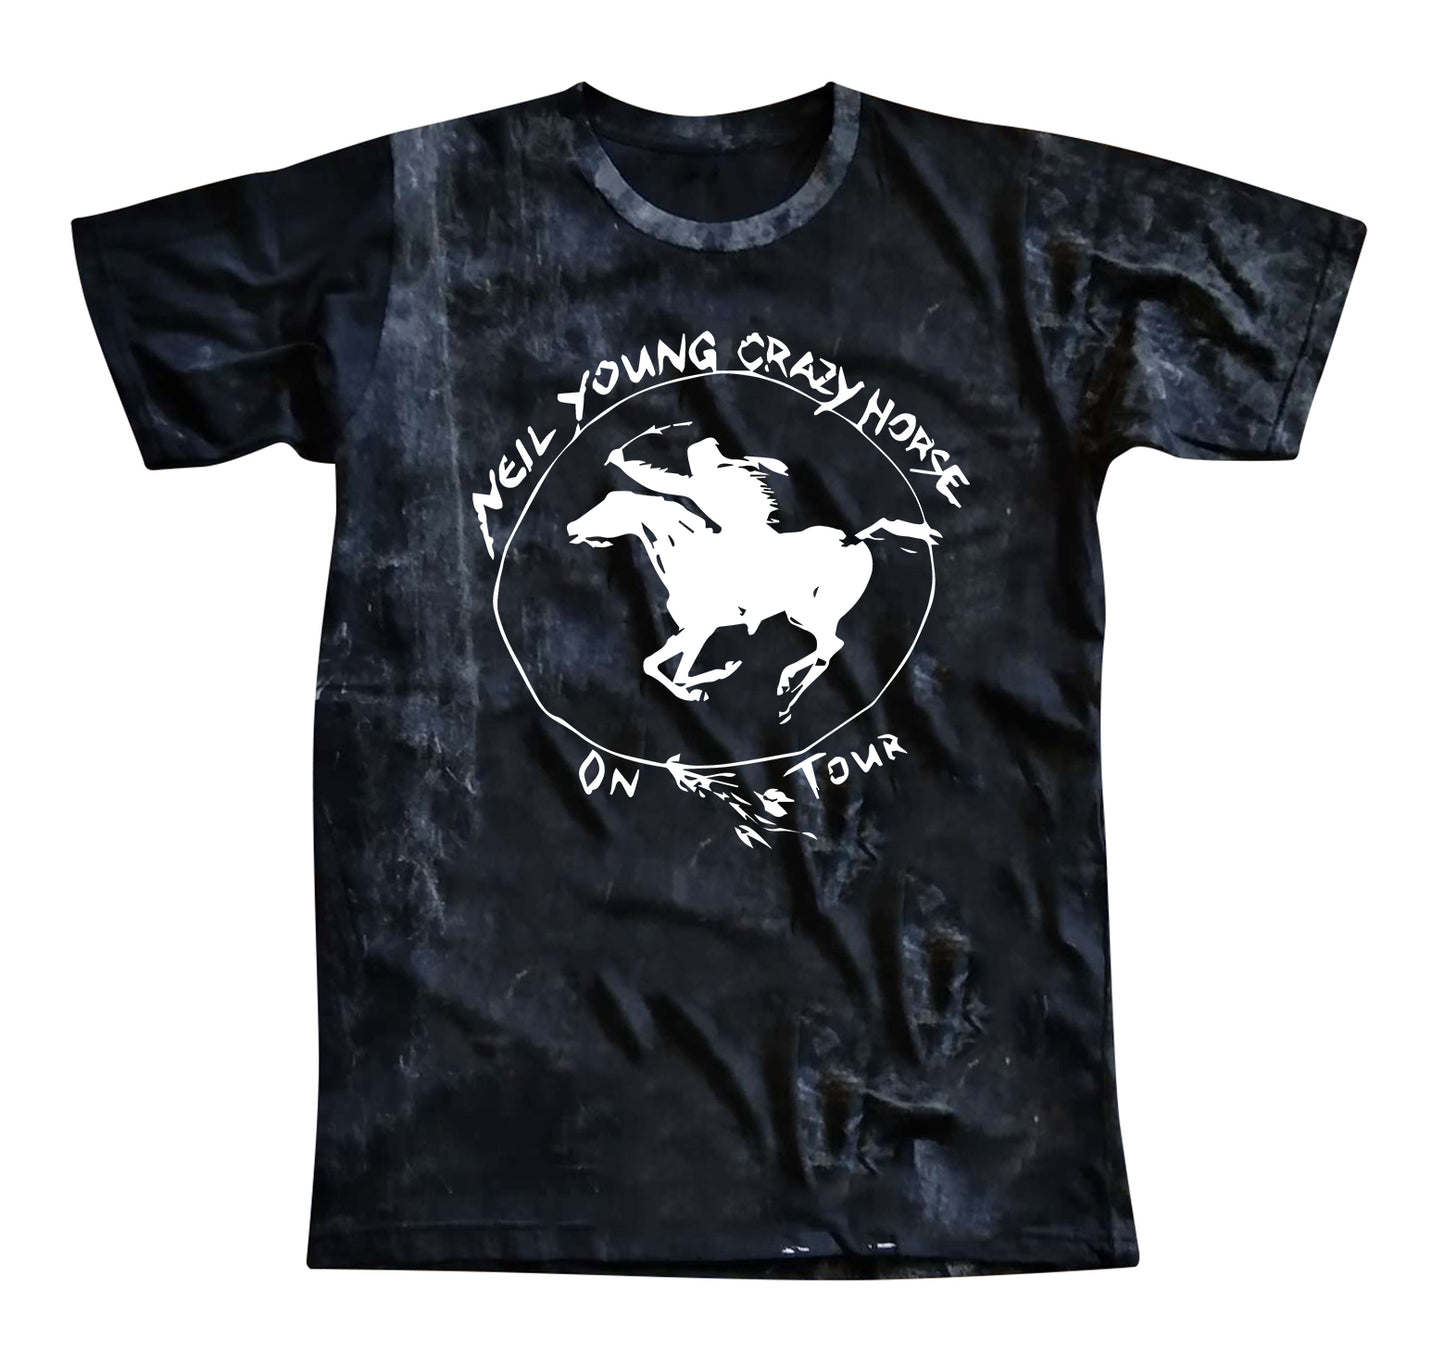 Neil Young Crazy Horse Short Sleeve T-Shirt